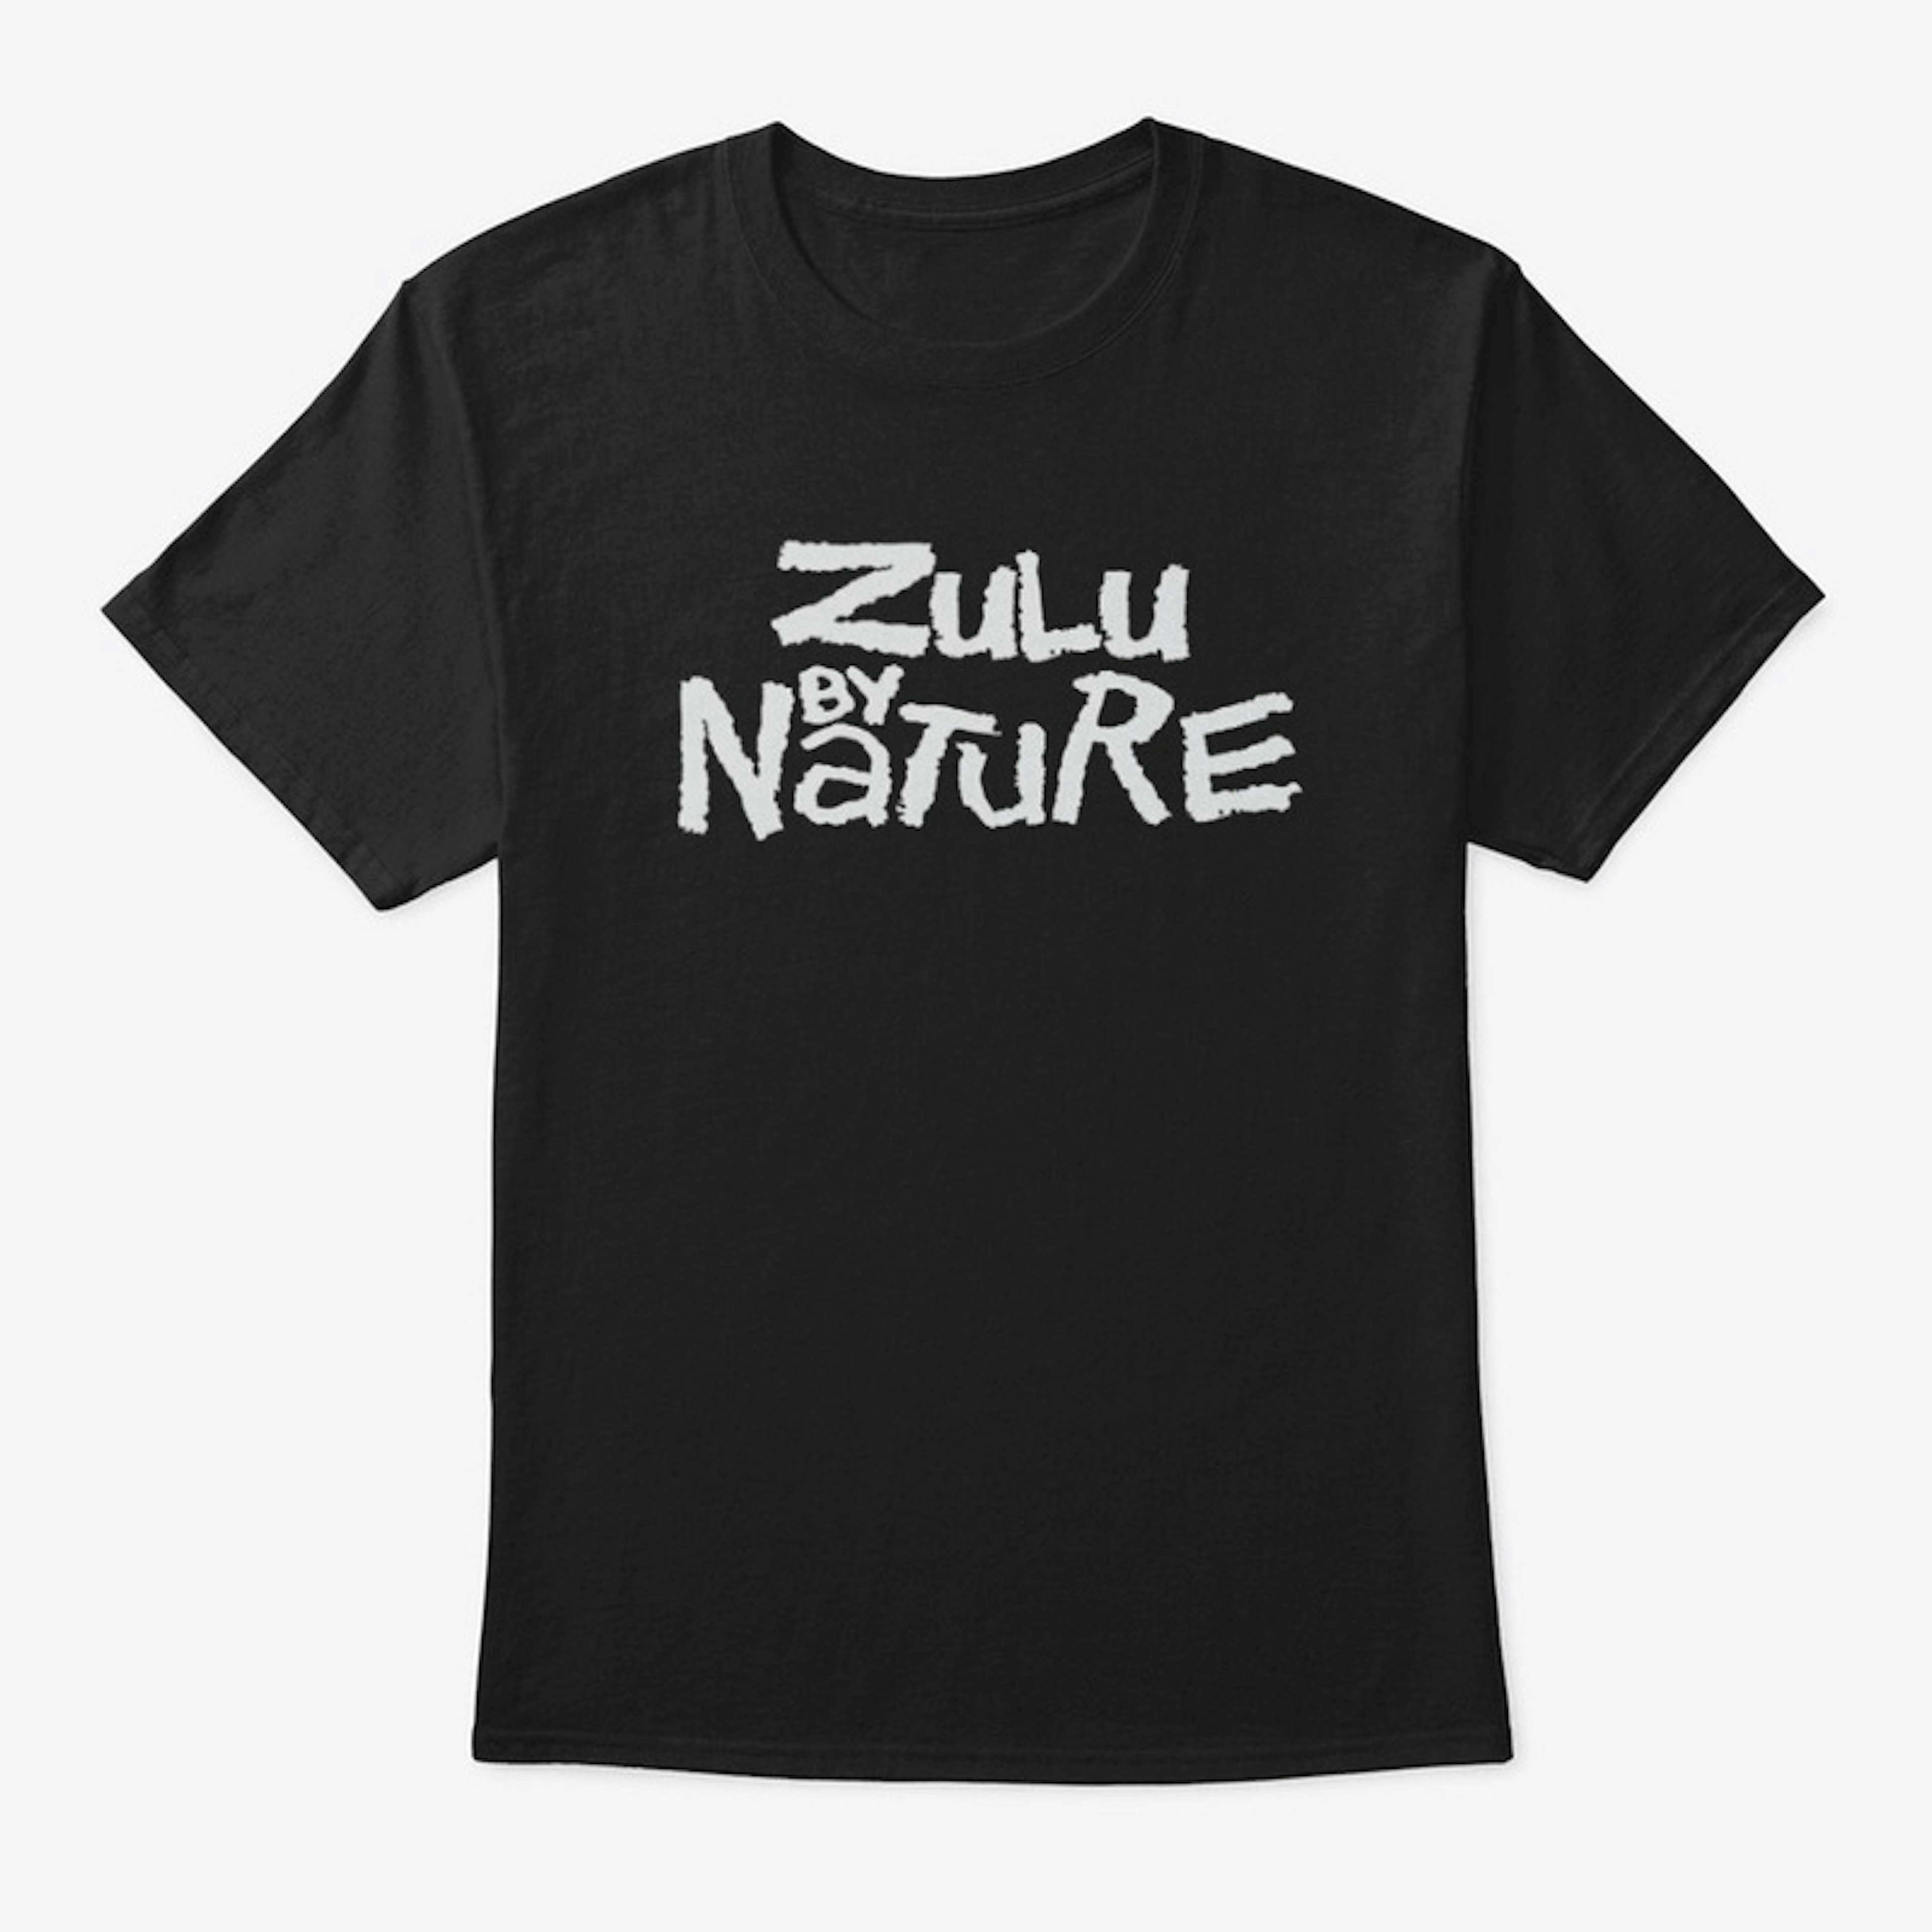 Zulu By Nature